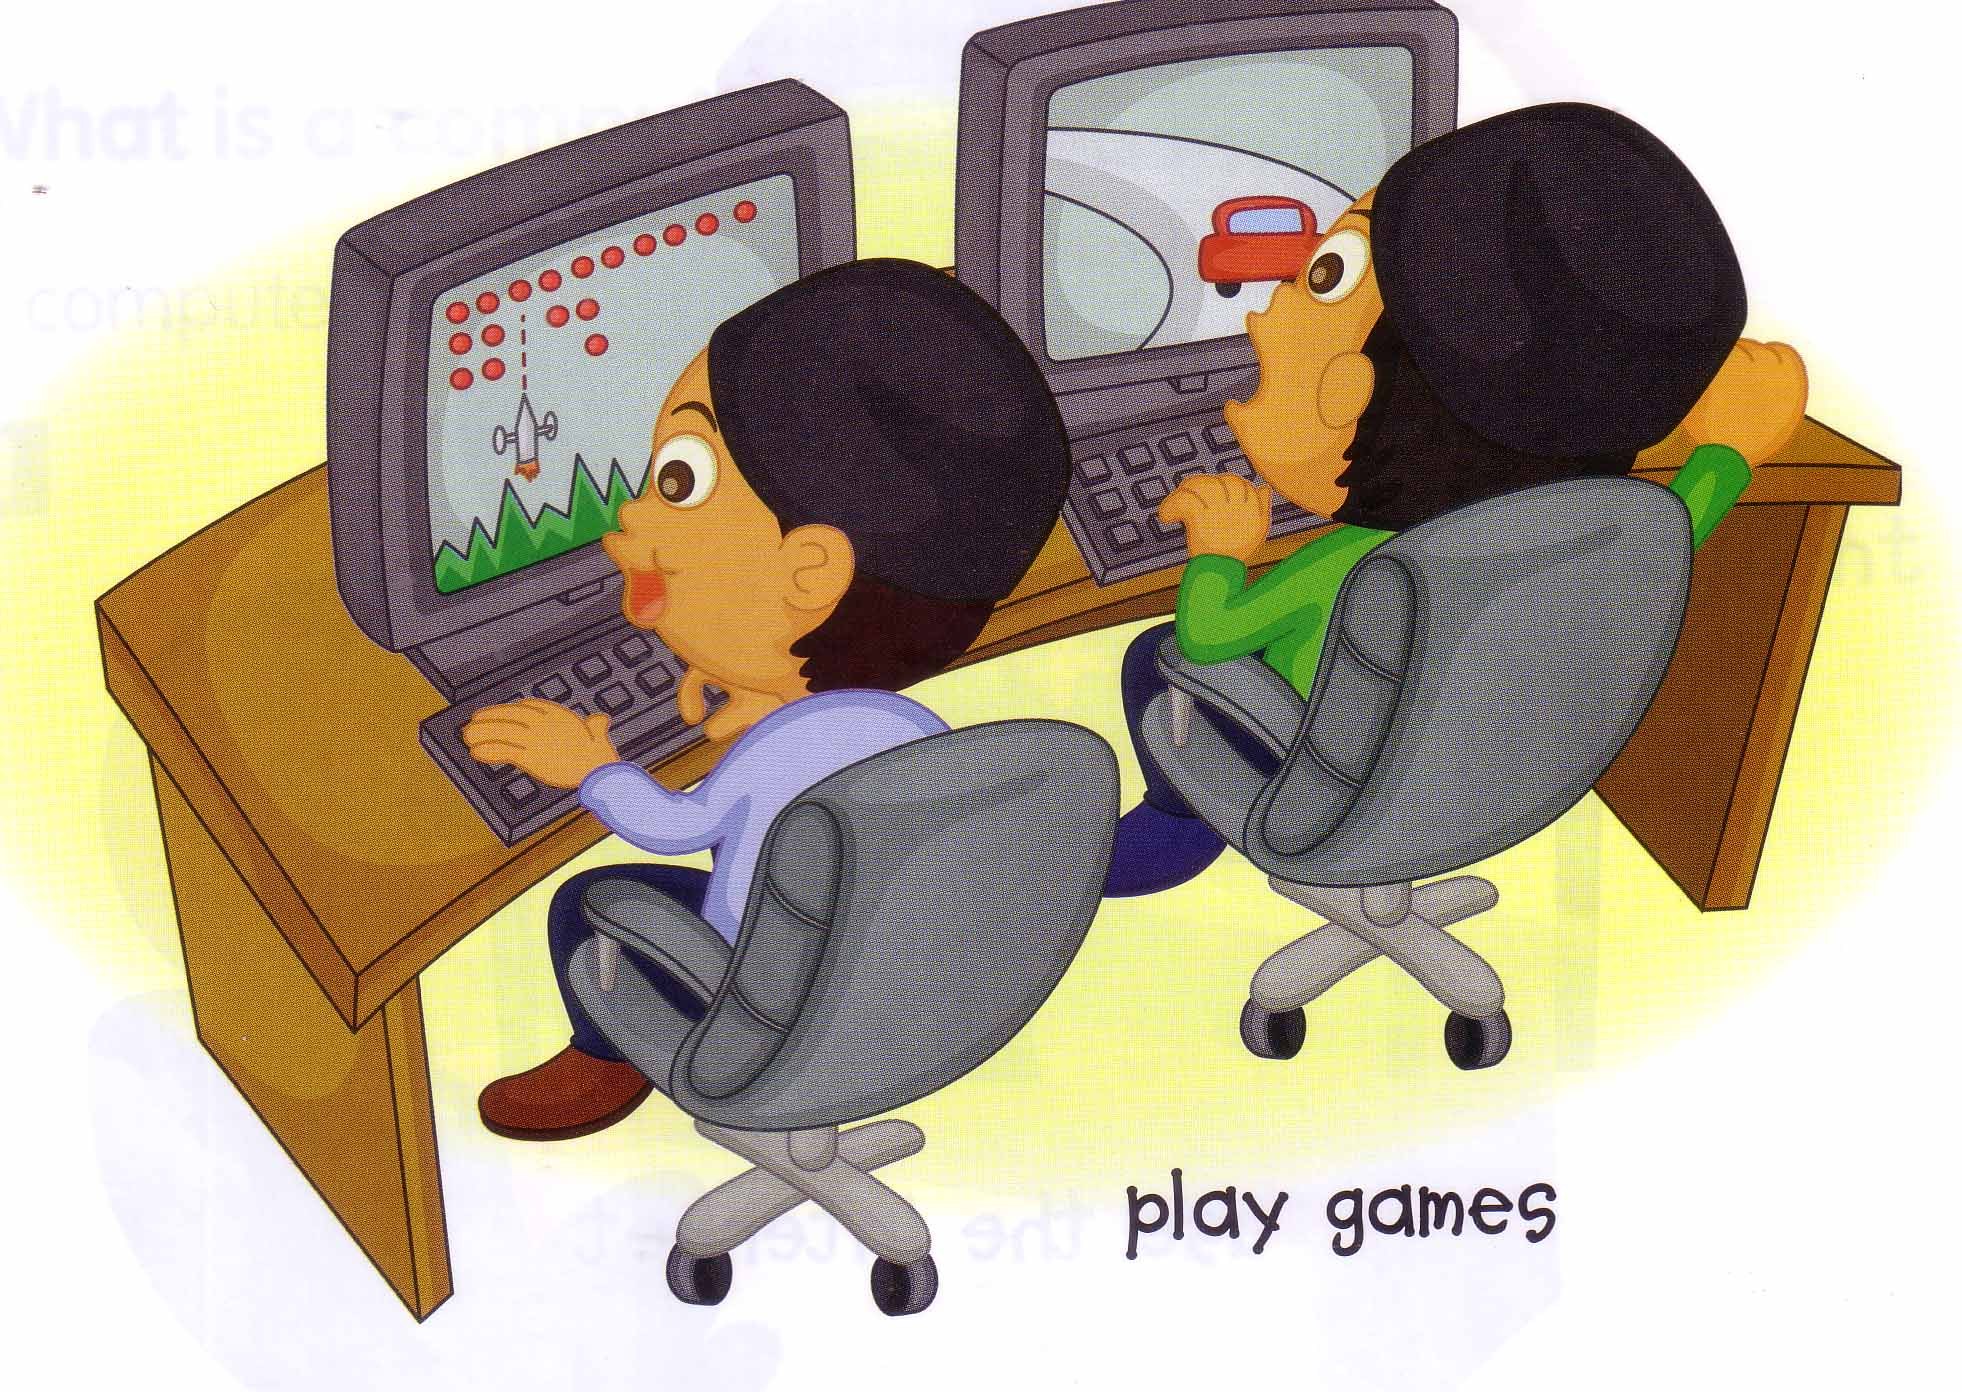 They playing a computer game. Компьютерные иллюстрации. Компьютерные игры для детей. Компьютерные игры иллюстрация. Компьютерные игры мультяшные.